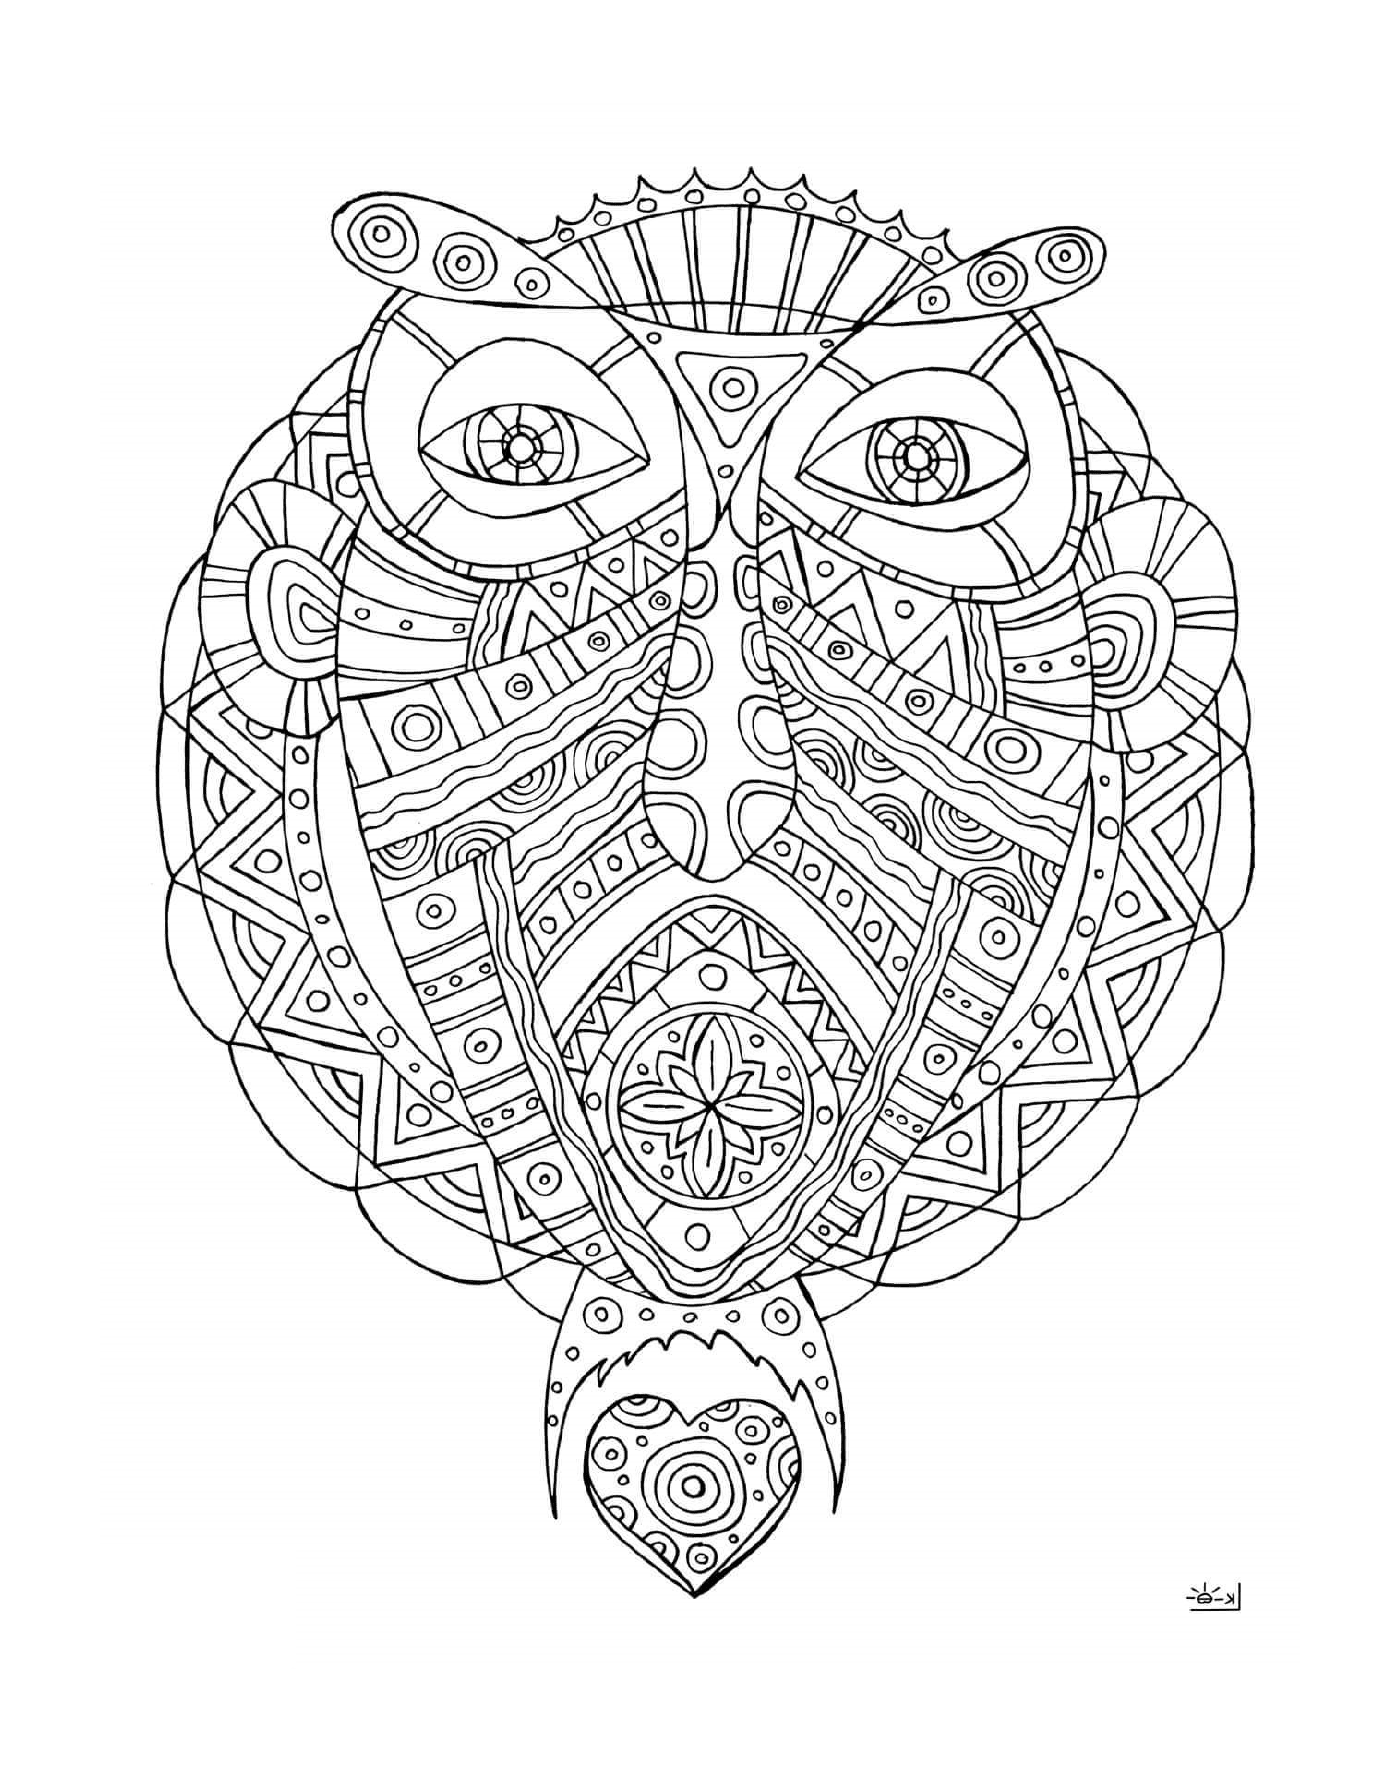  A complex owl in a circle 